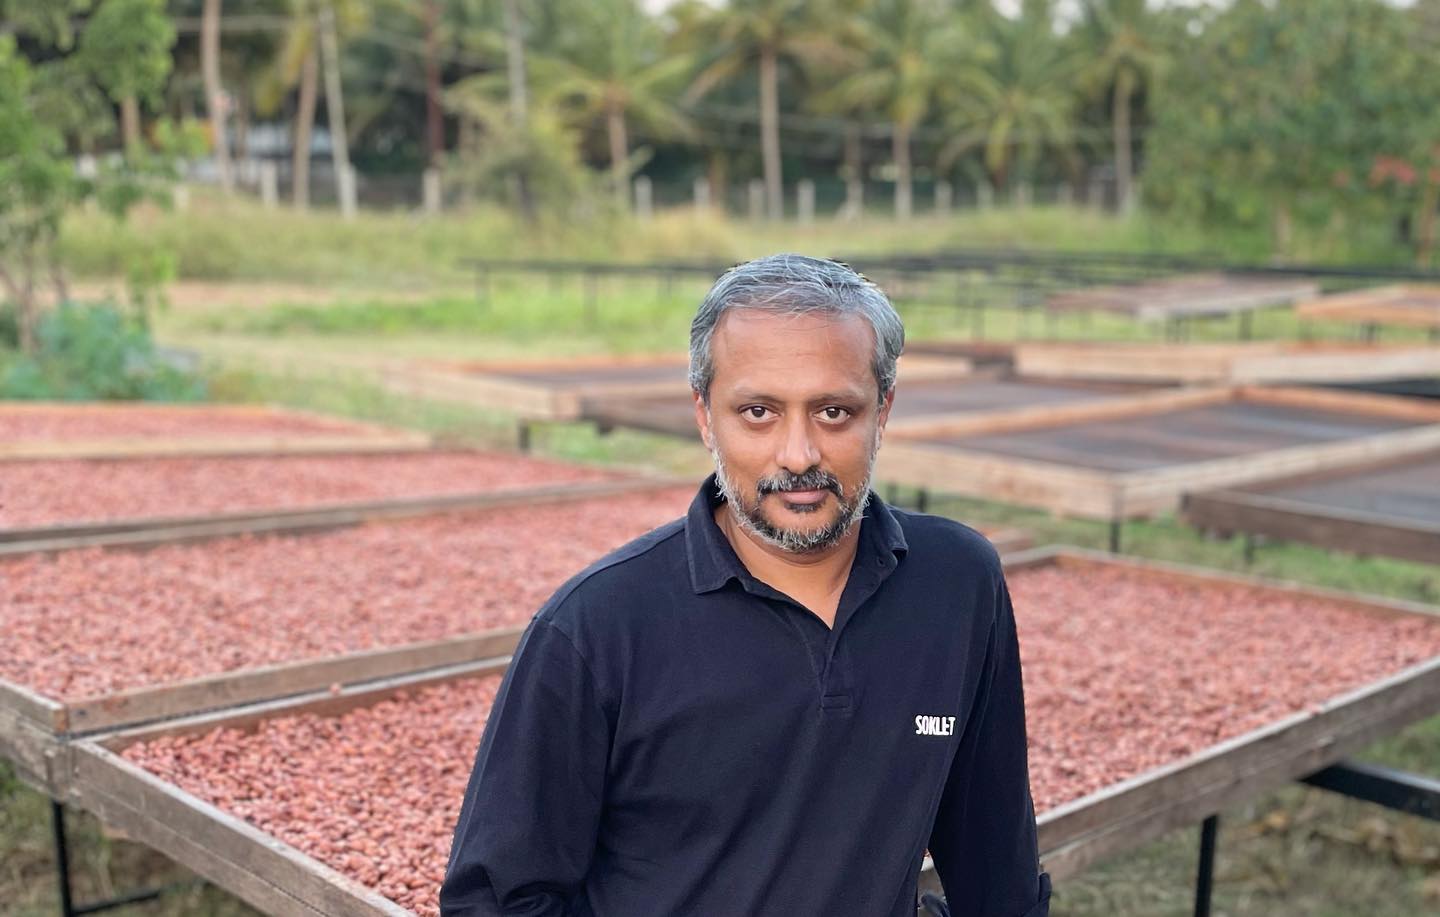 Karthikeyan Palanisamy, founder of Soklet, an artisanal chocolate brand